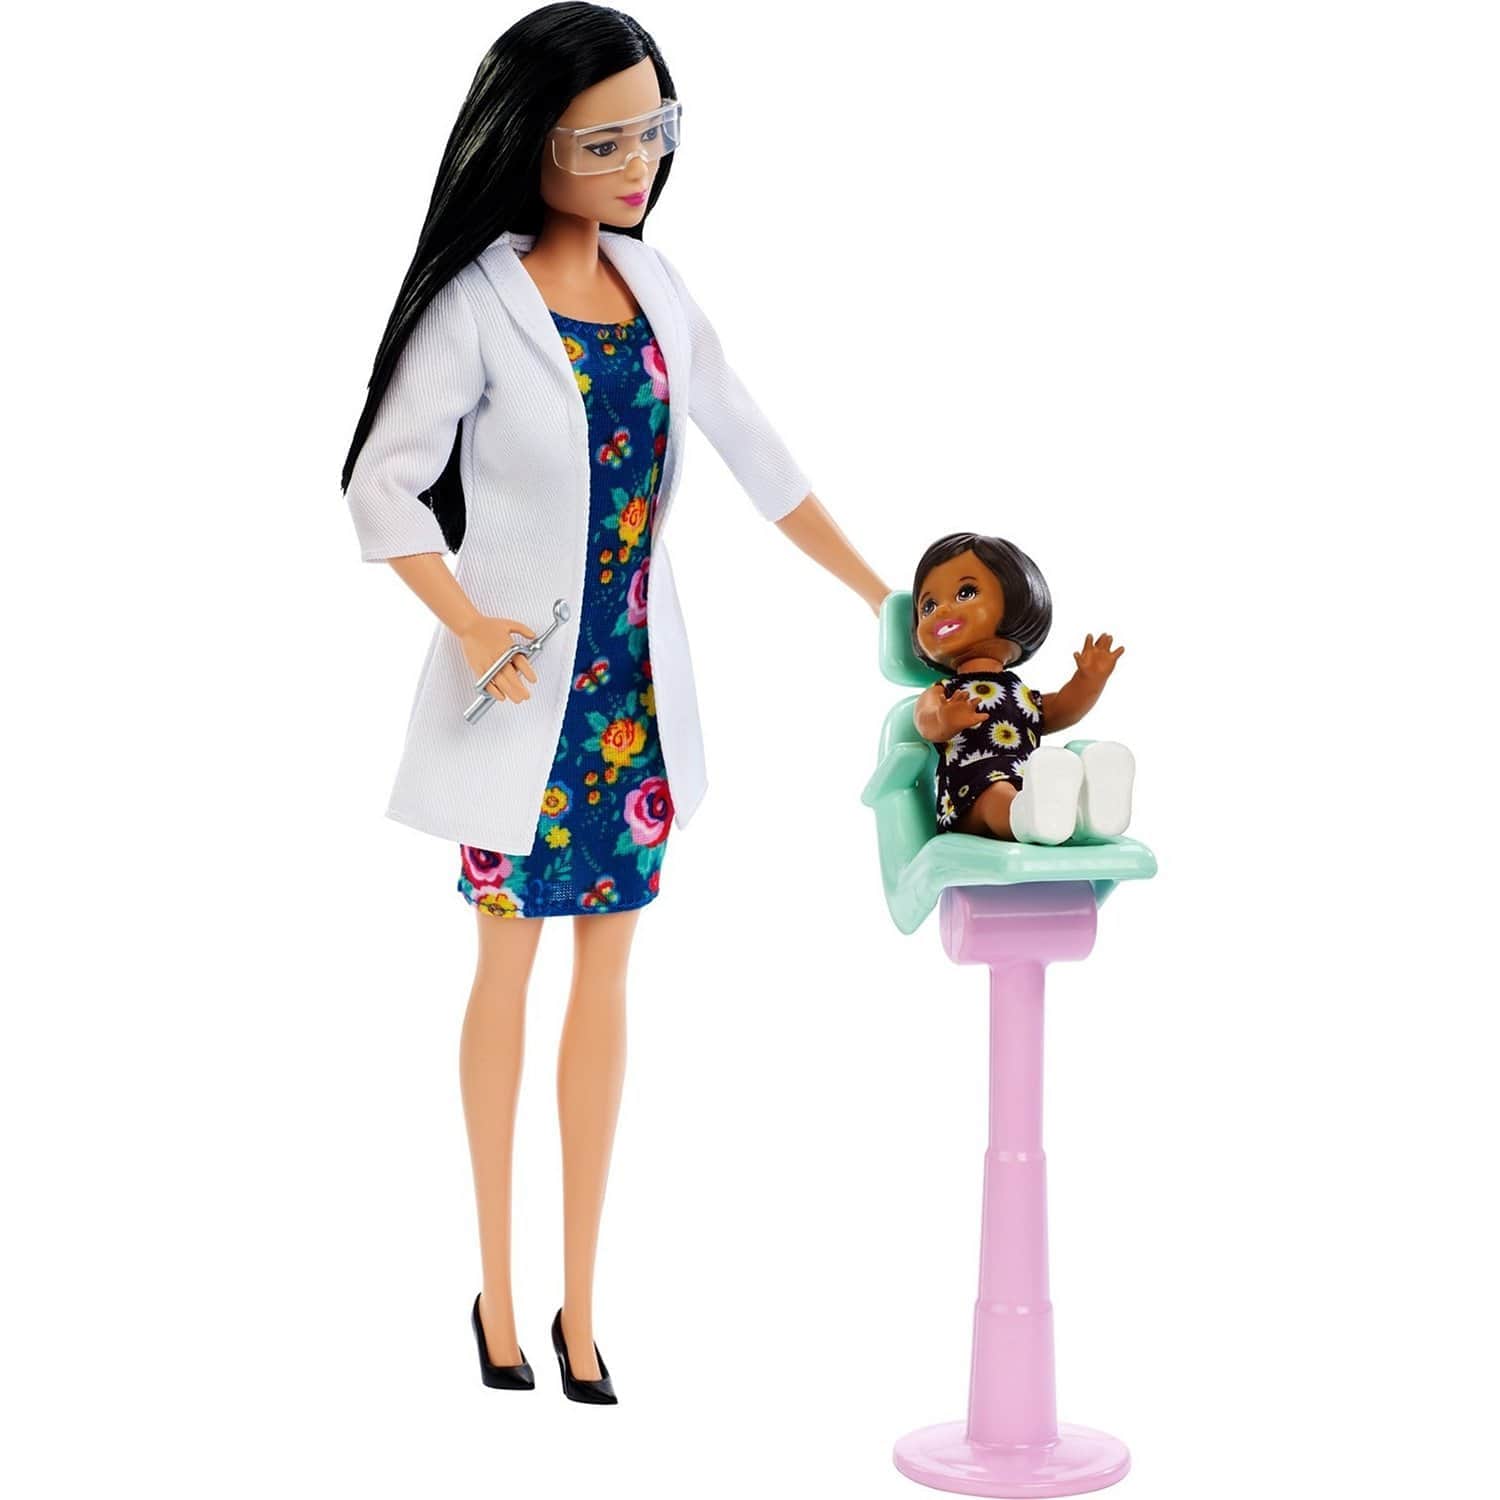 Набор Barbie Профессии Стоматолог Брюнетка, FXP17